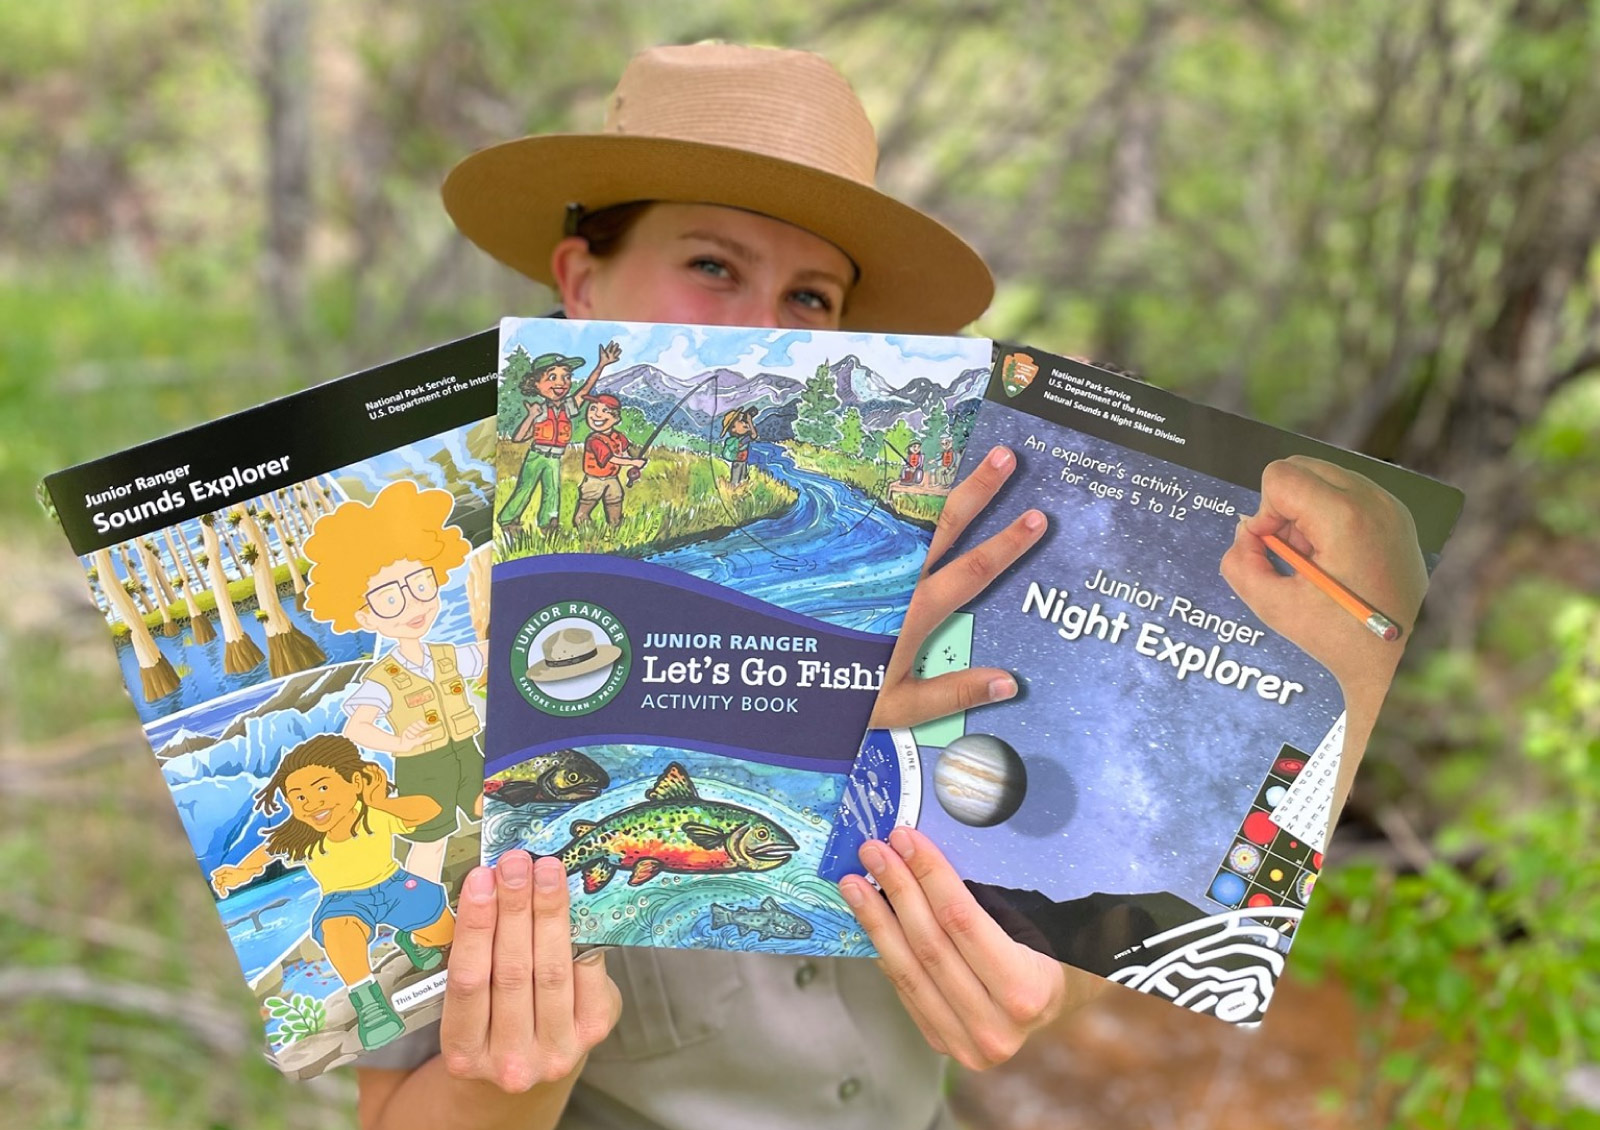 Ranger holds three activity booklets: Night Explorer, Sound Explorer, Junior Angler